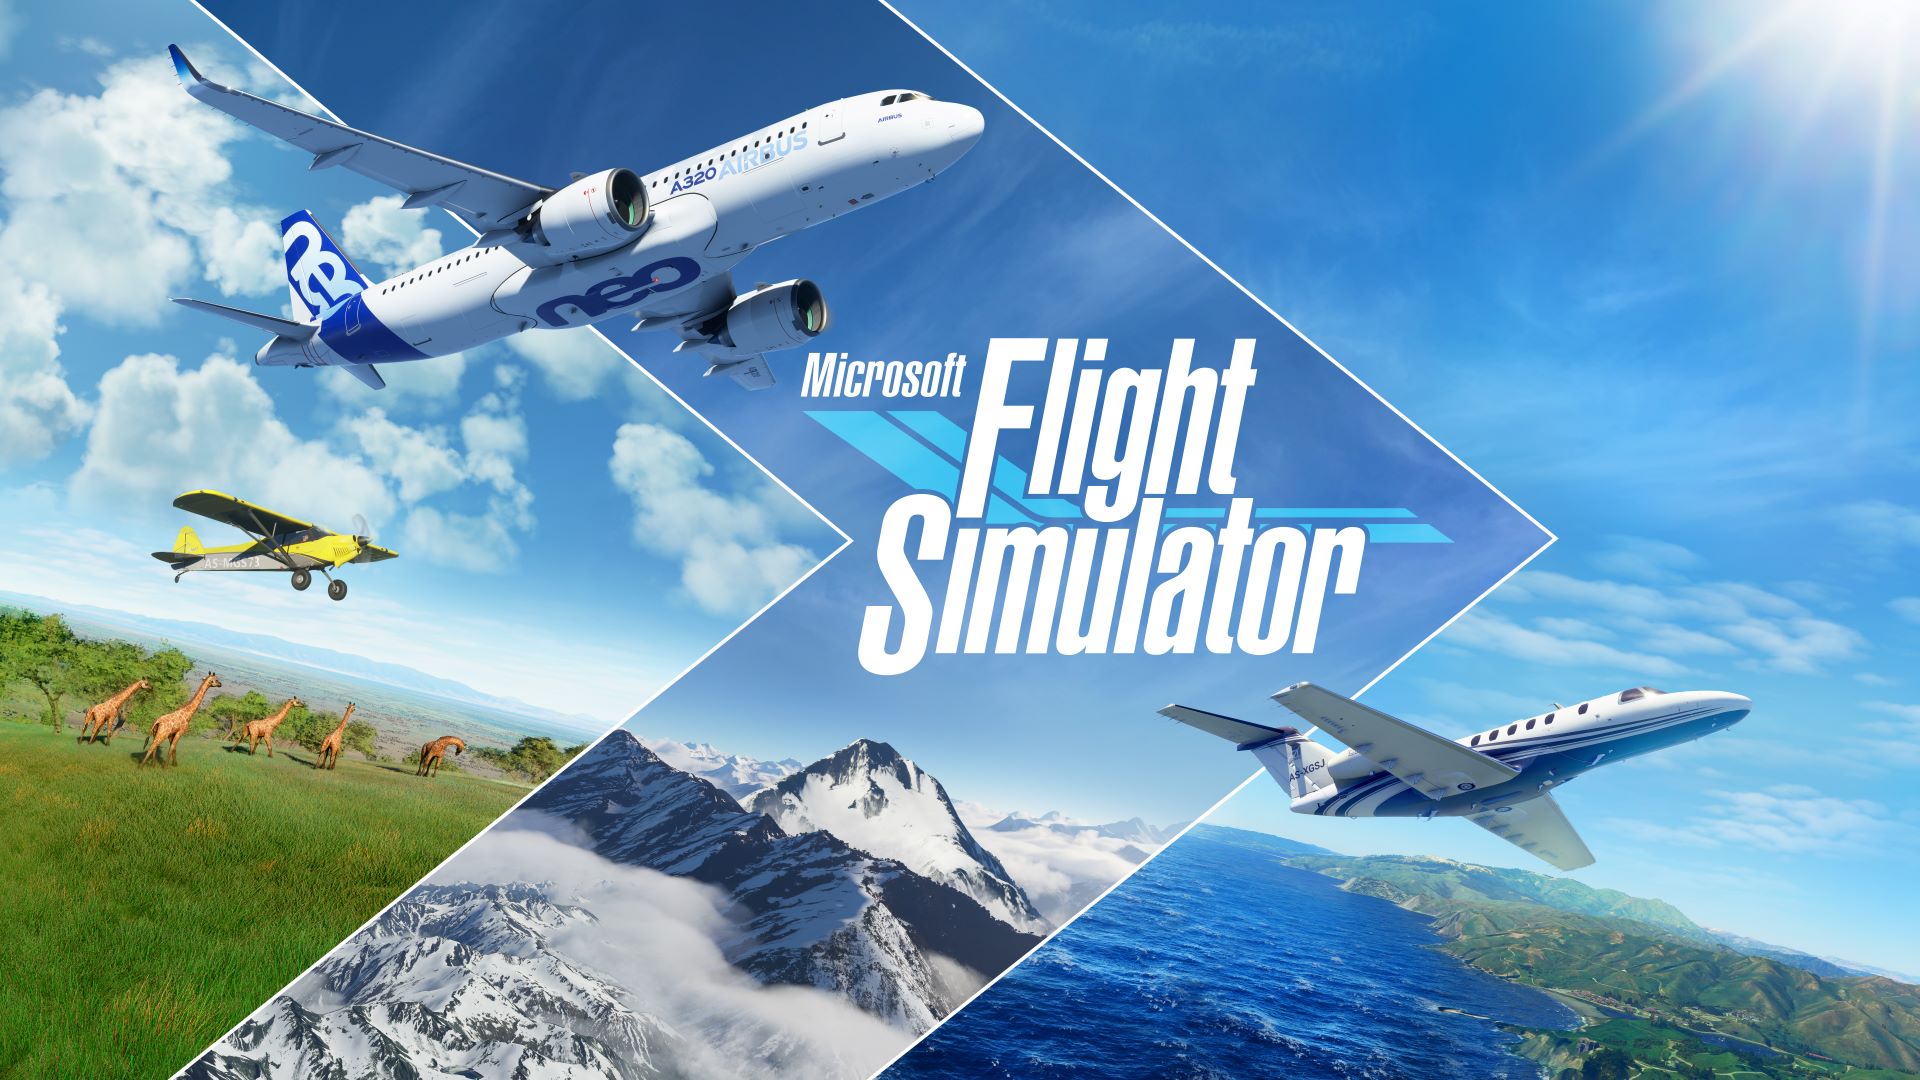 Microsoft Flight Simulator เกมจำลองการขับเครื่องบินเสมือนจริง อัปเดตรองรับการเล่นผ่าน VR แล้วตอนนี้!